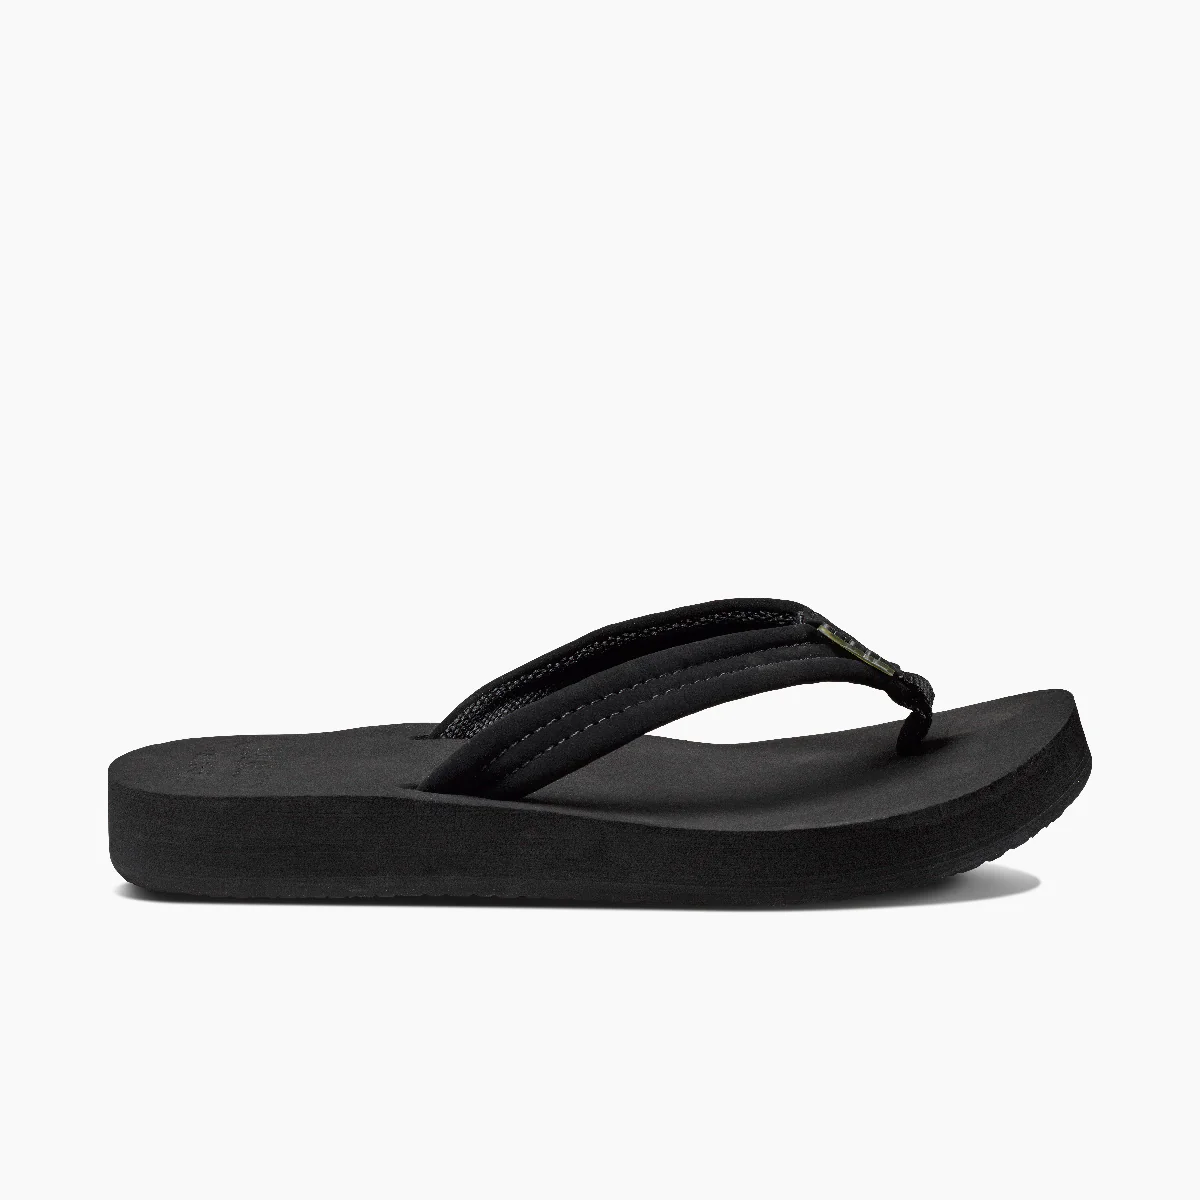 Women's Reef Cushion Breeze Sandals in Black/Black side view